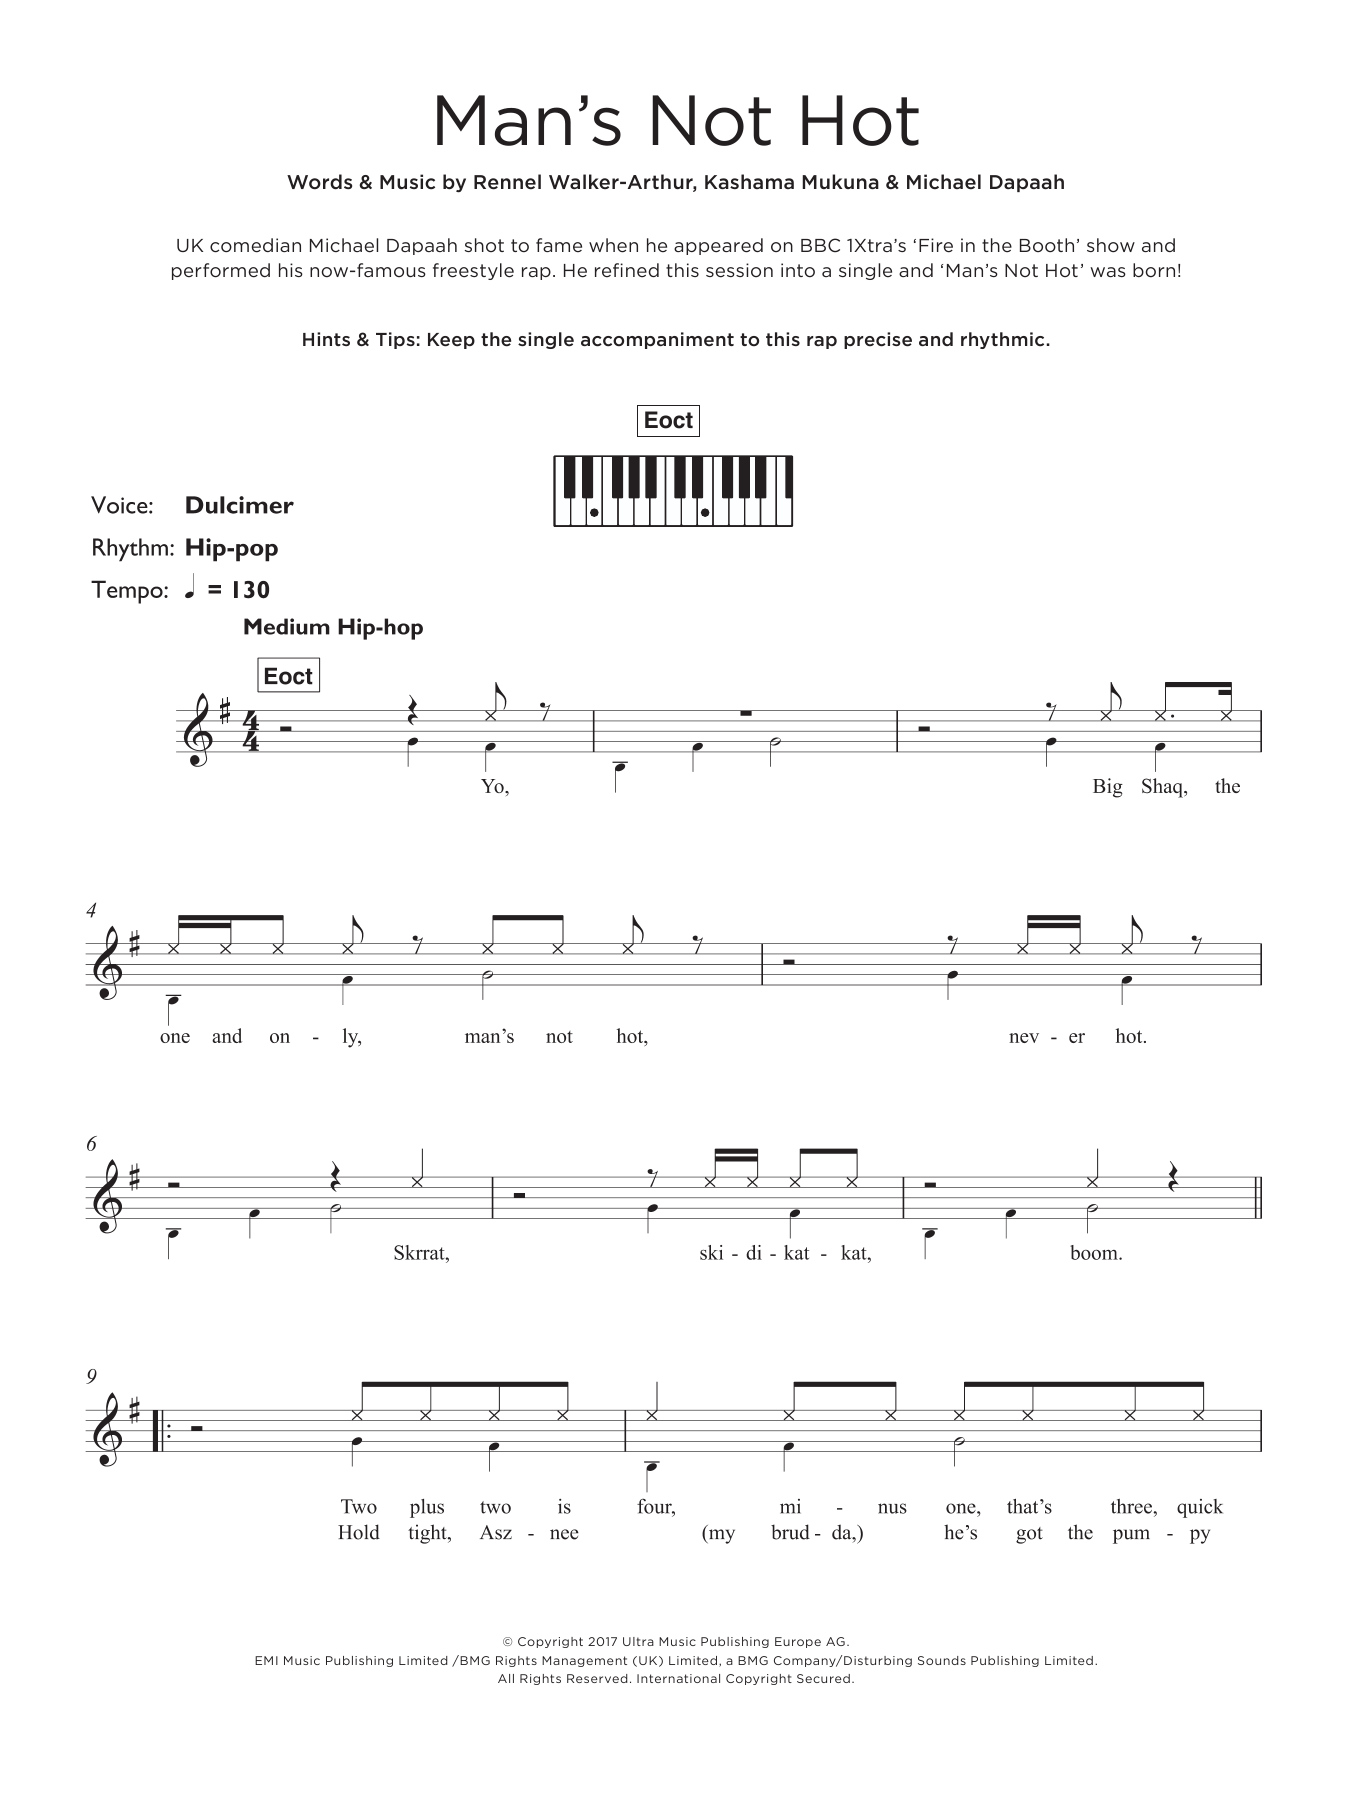 Big Shaq Man's Not Hot Sheet Music Notes & Chords for Beginner Piano - Download or Print PDF